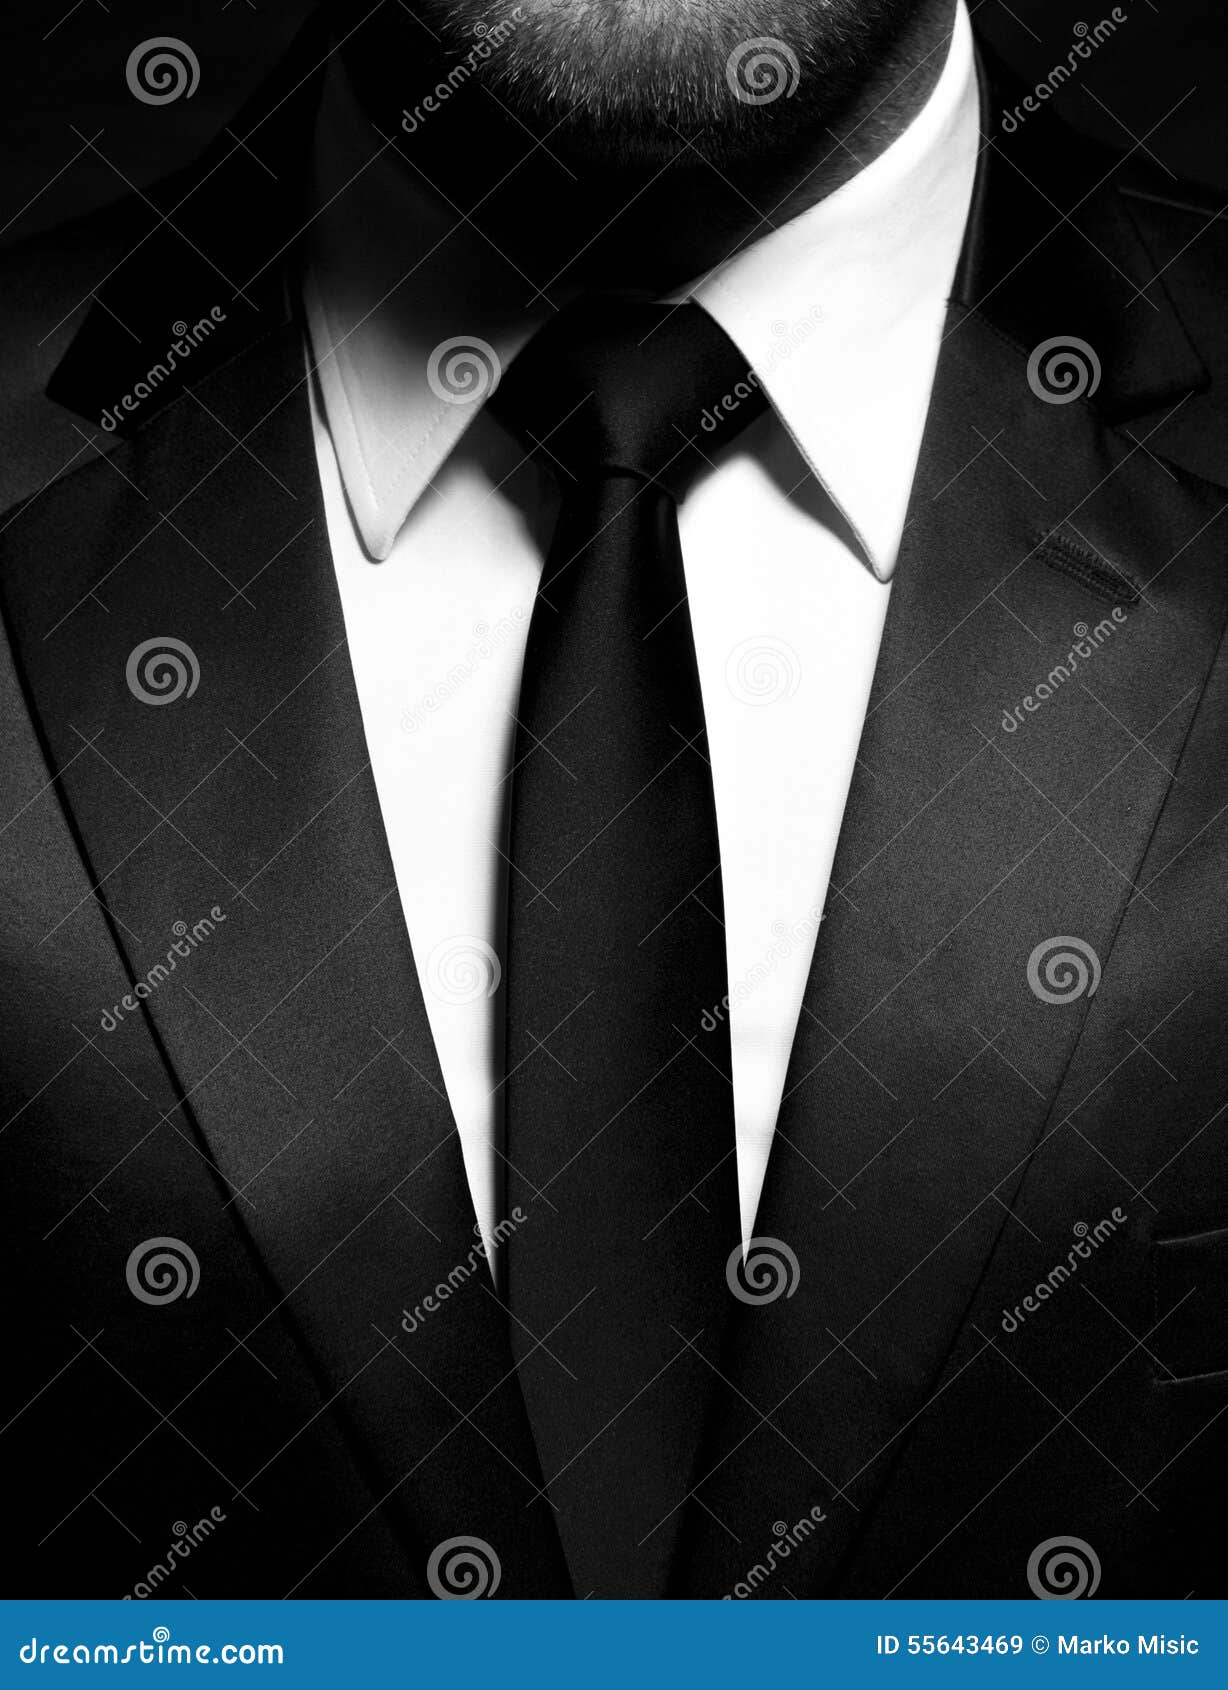 Gentleman Wearing a Black Suit, Shirt and Tie, Tuxedo Stock Image ...